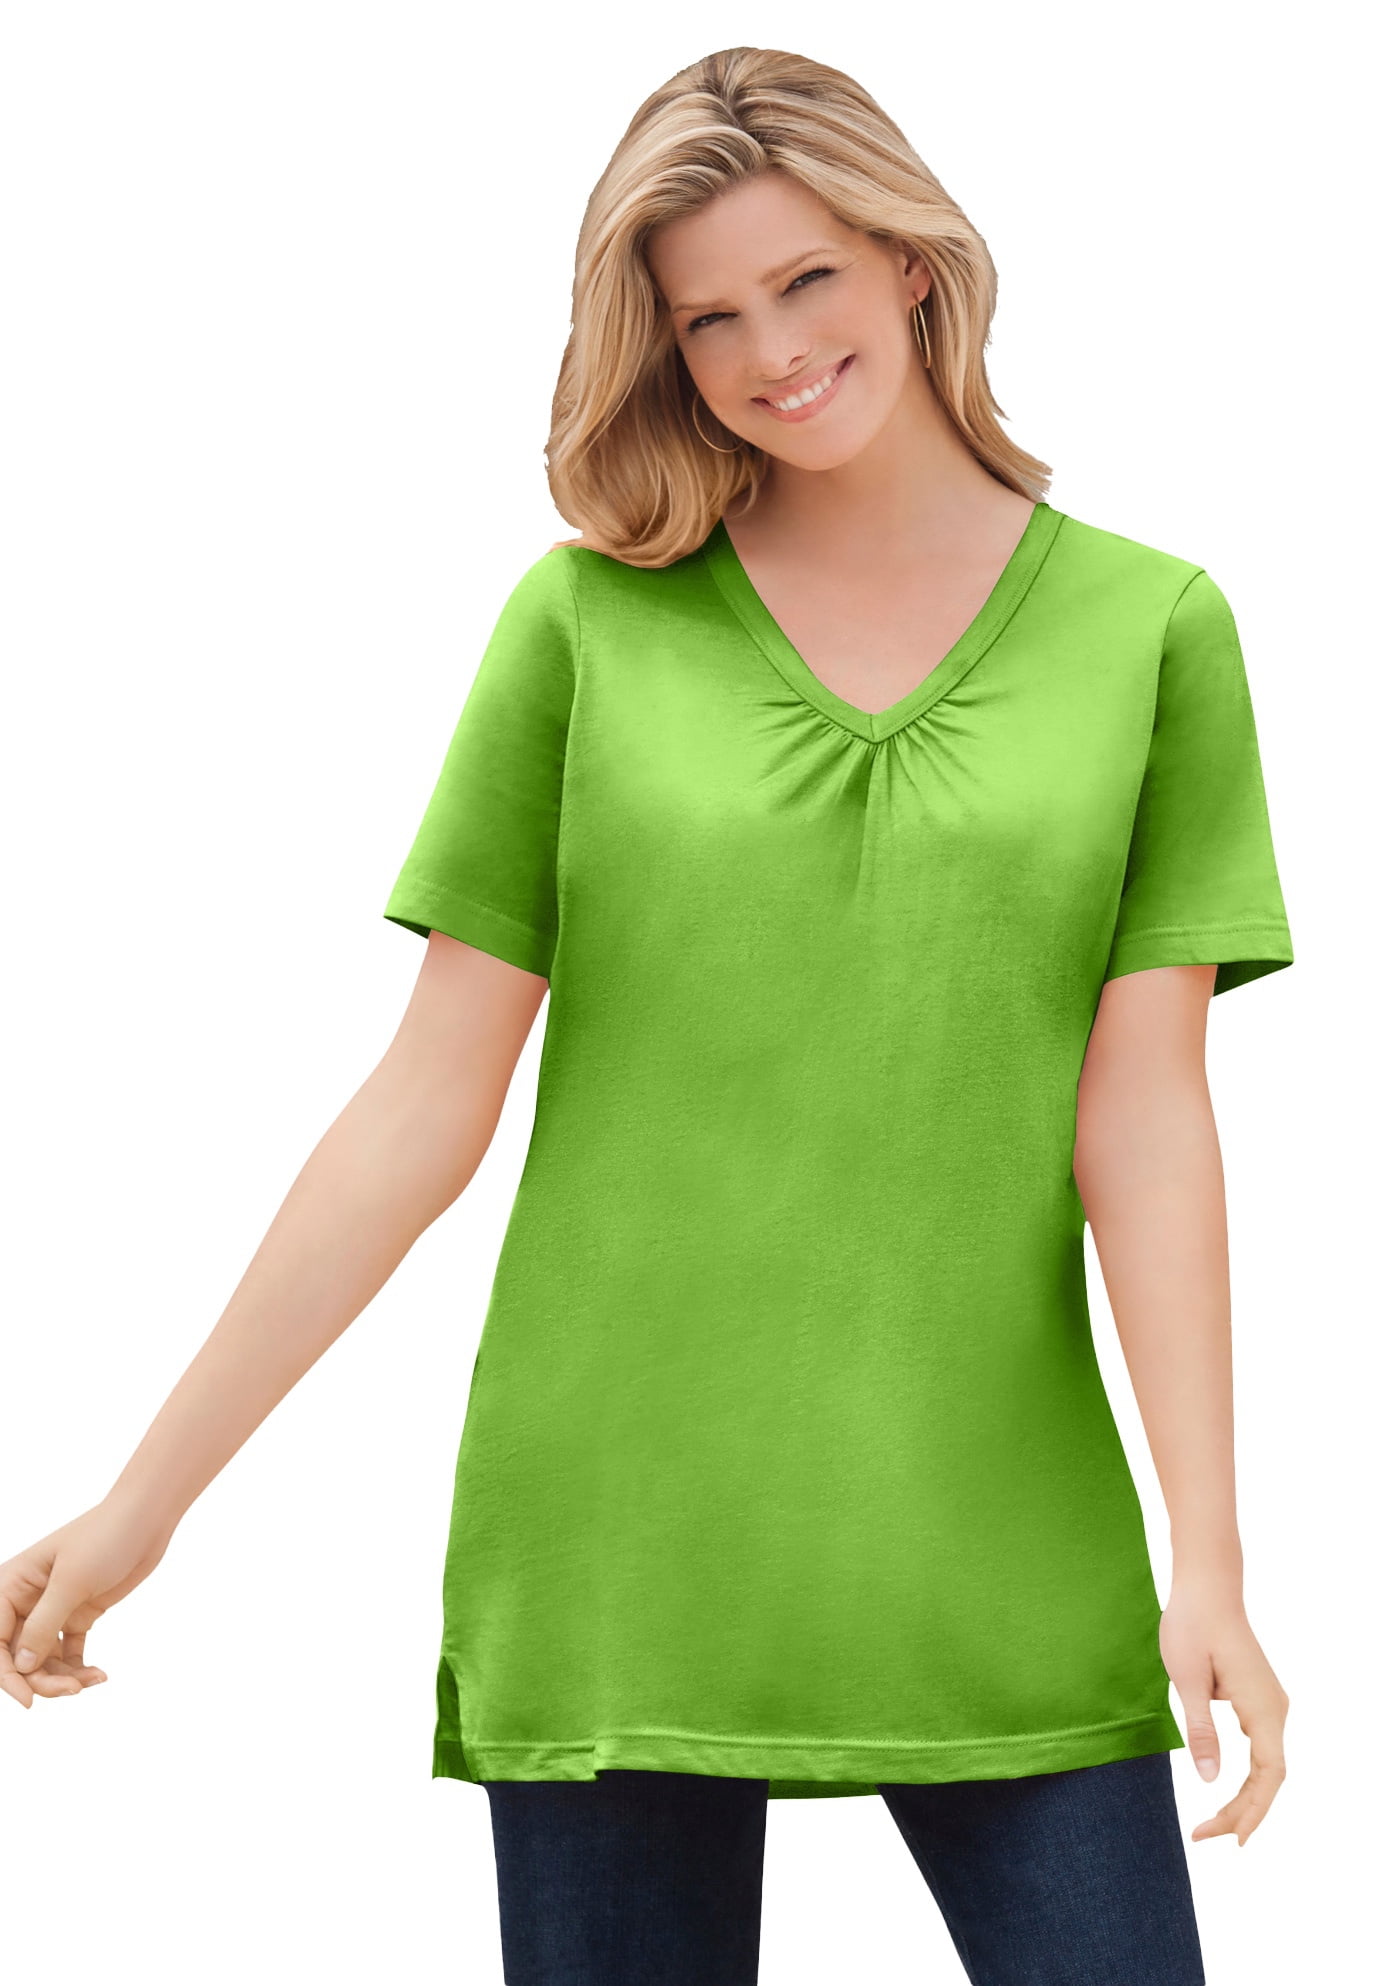 Catherines women 3X shirt top chevron tee marina blue green short slv tie new A4